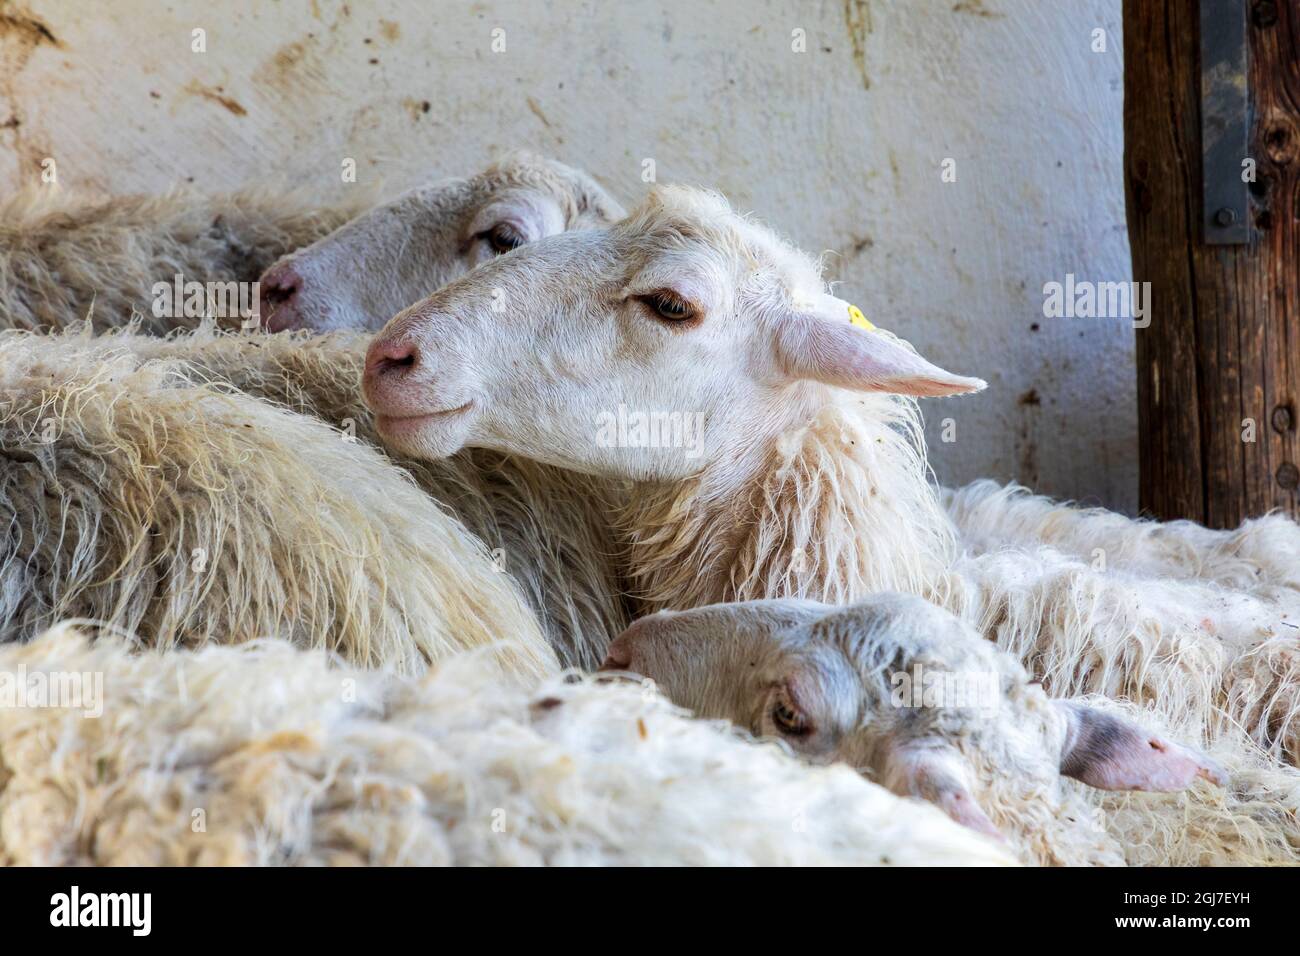 Italy, Sicily, Polina. Sheep in rural Pollina. Stock Photo